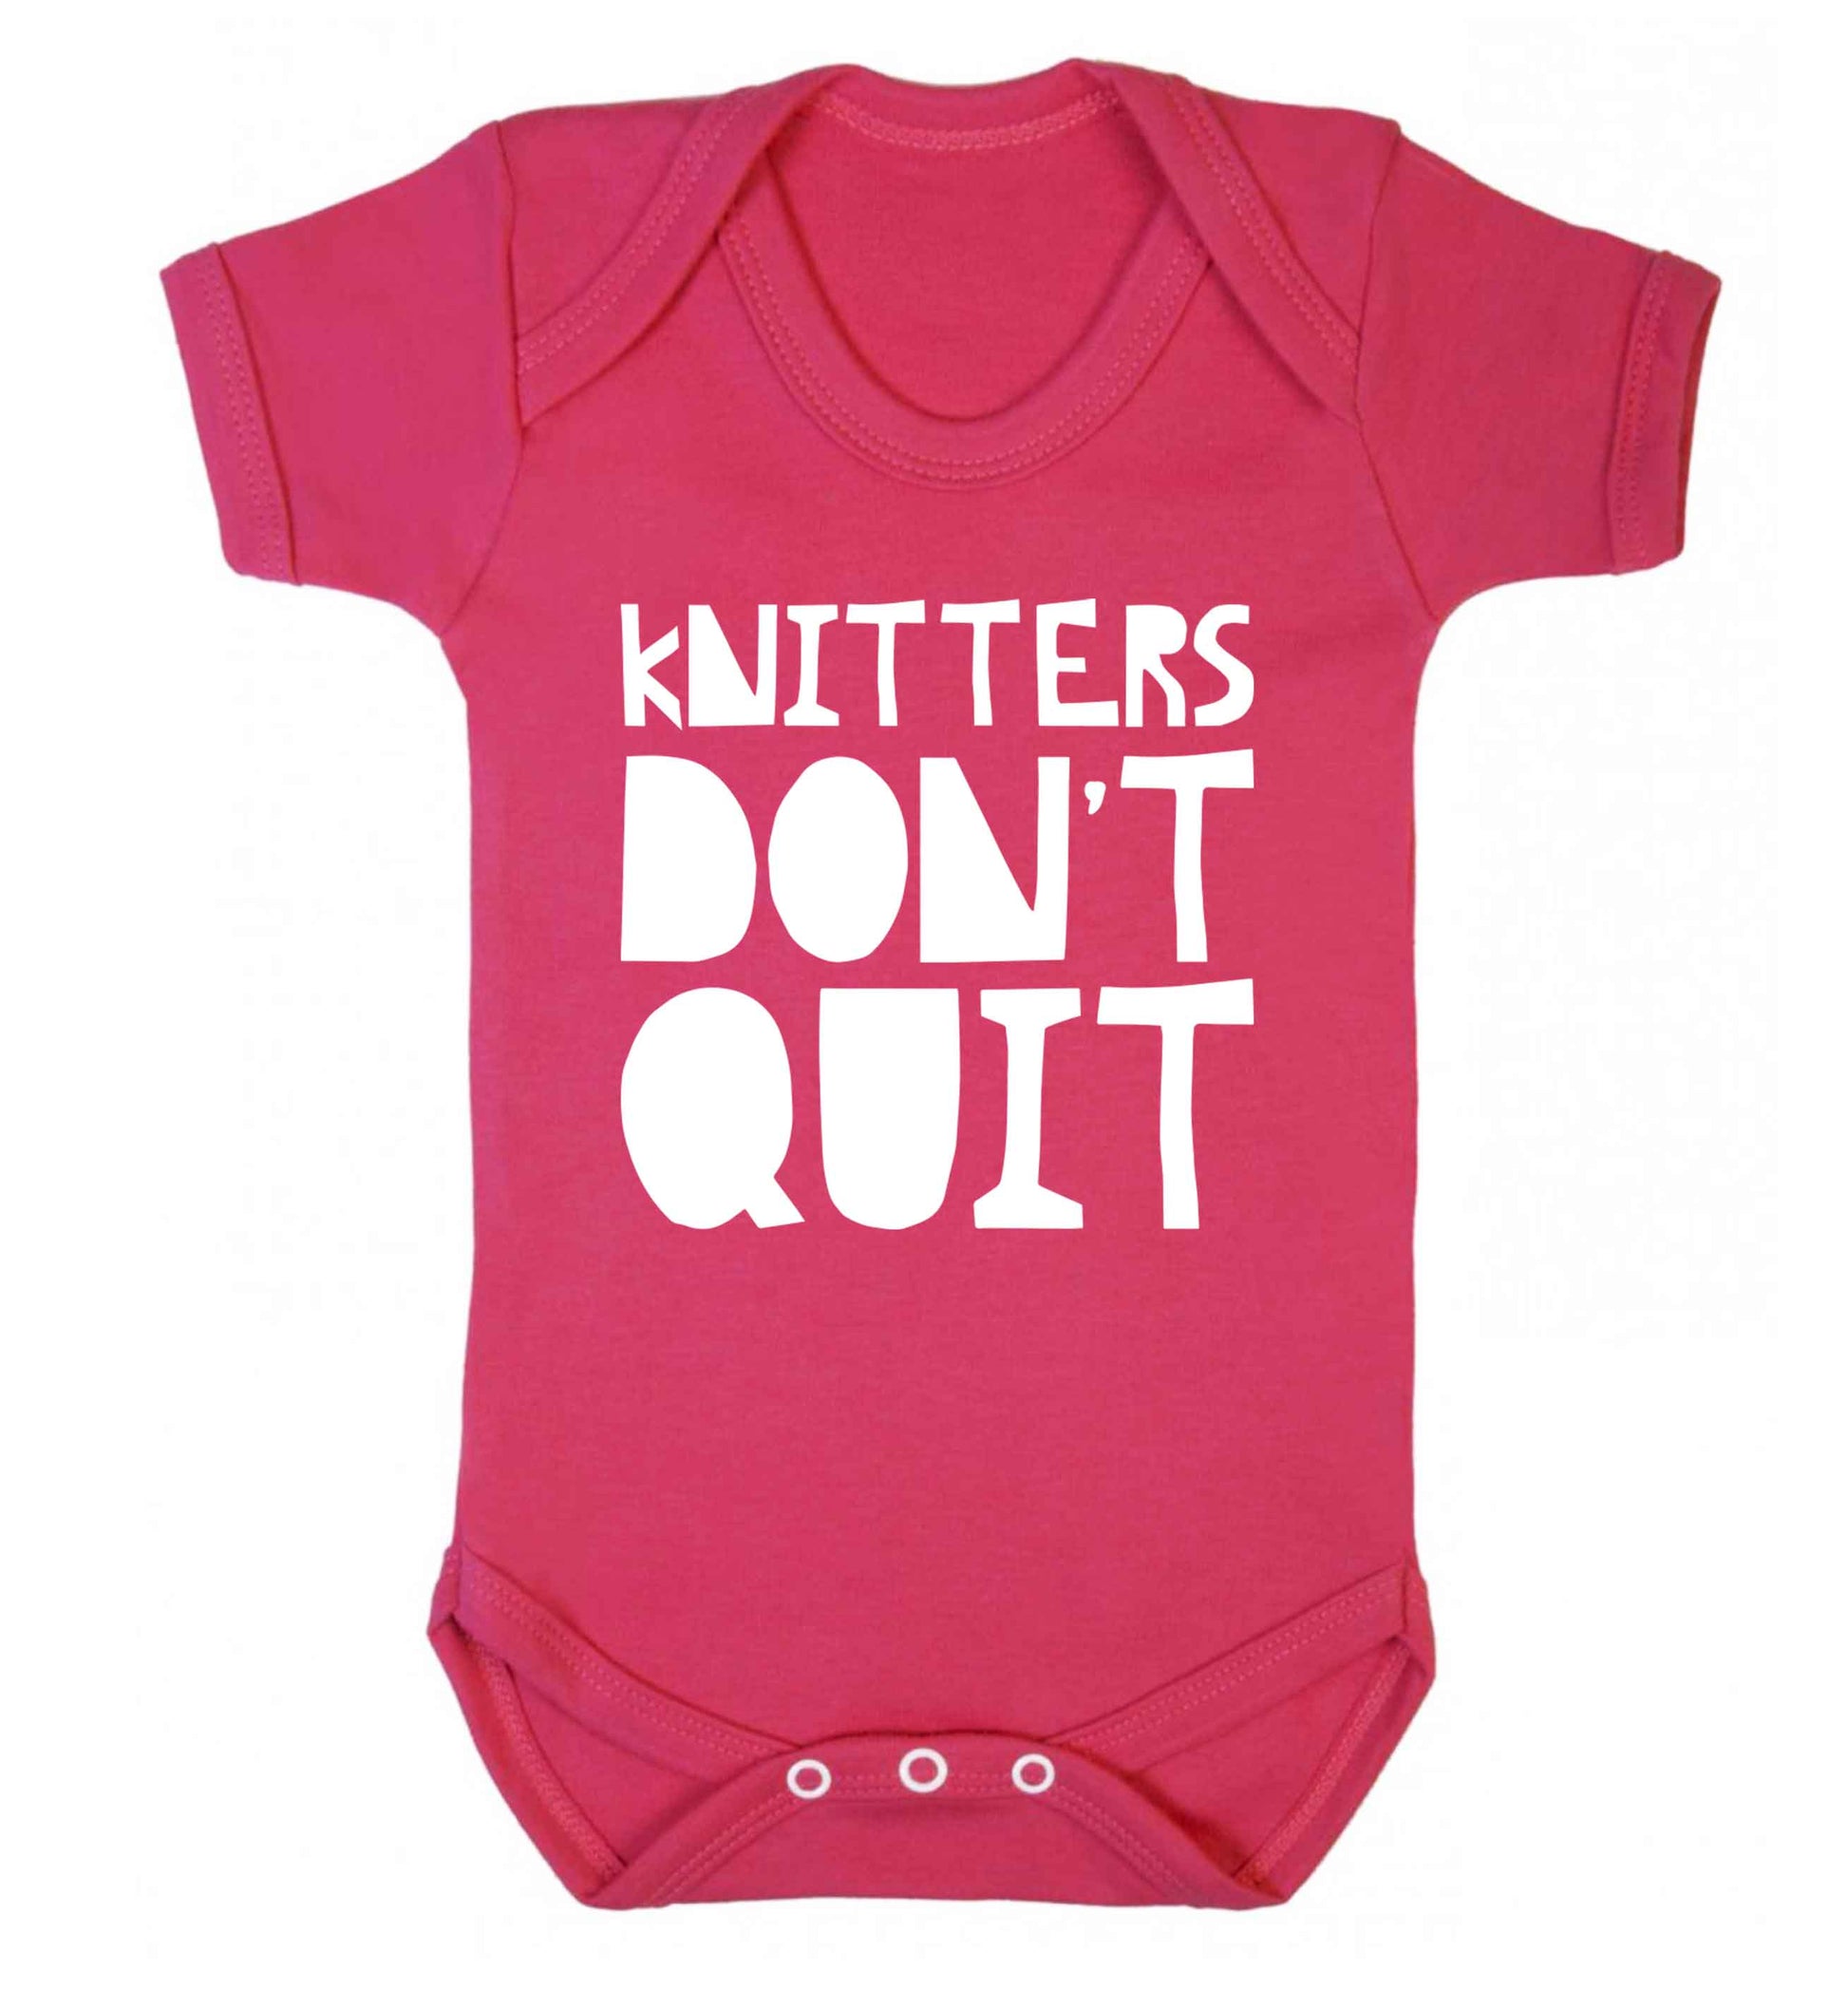 Knitters don't quit Baby Vest dark pink 18-24 months